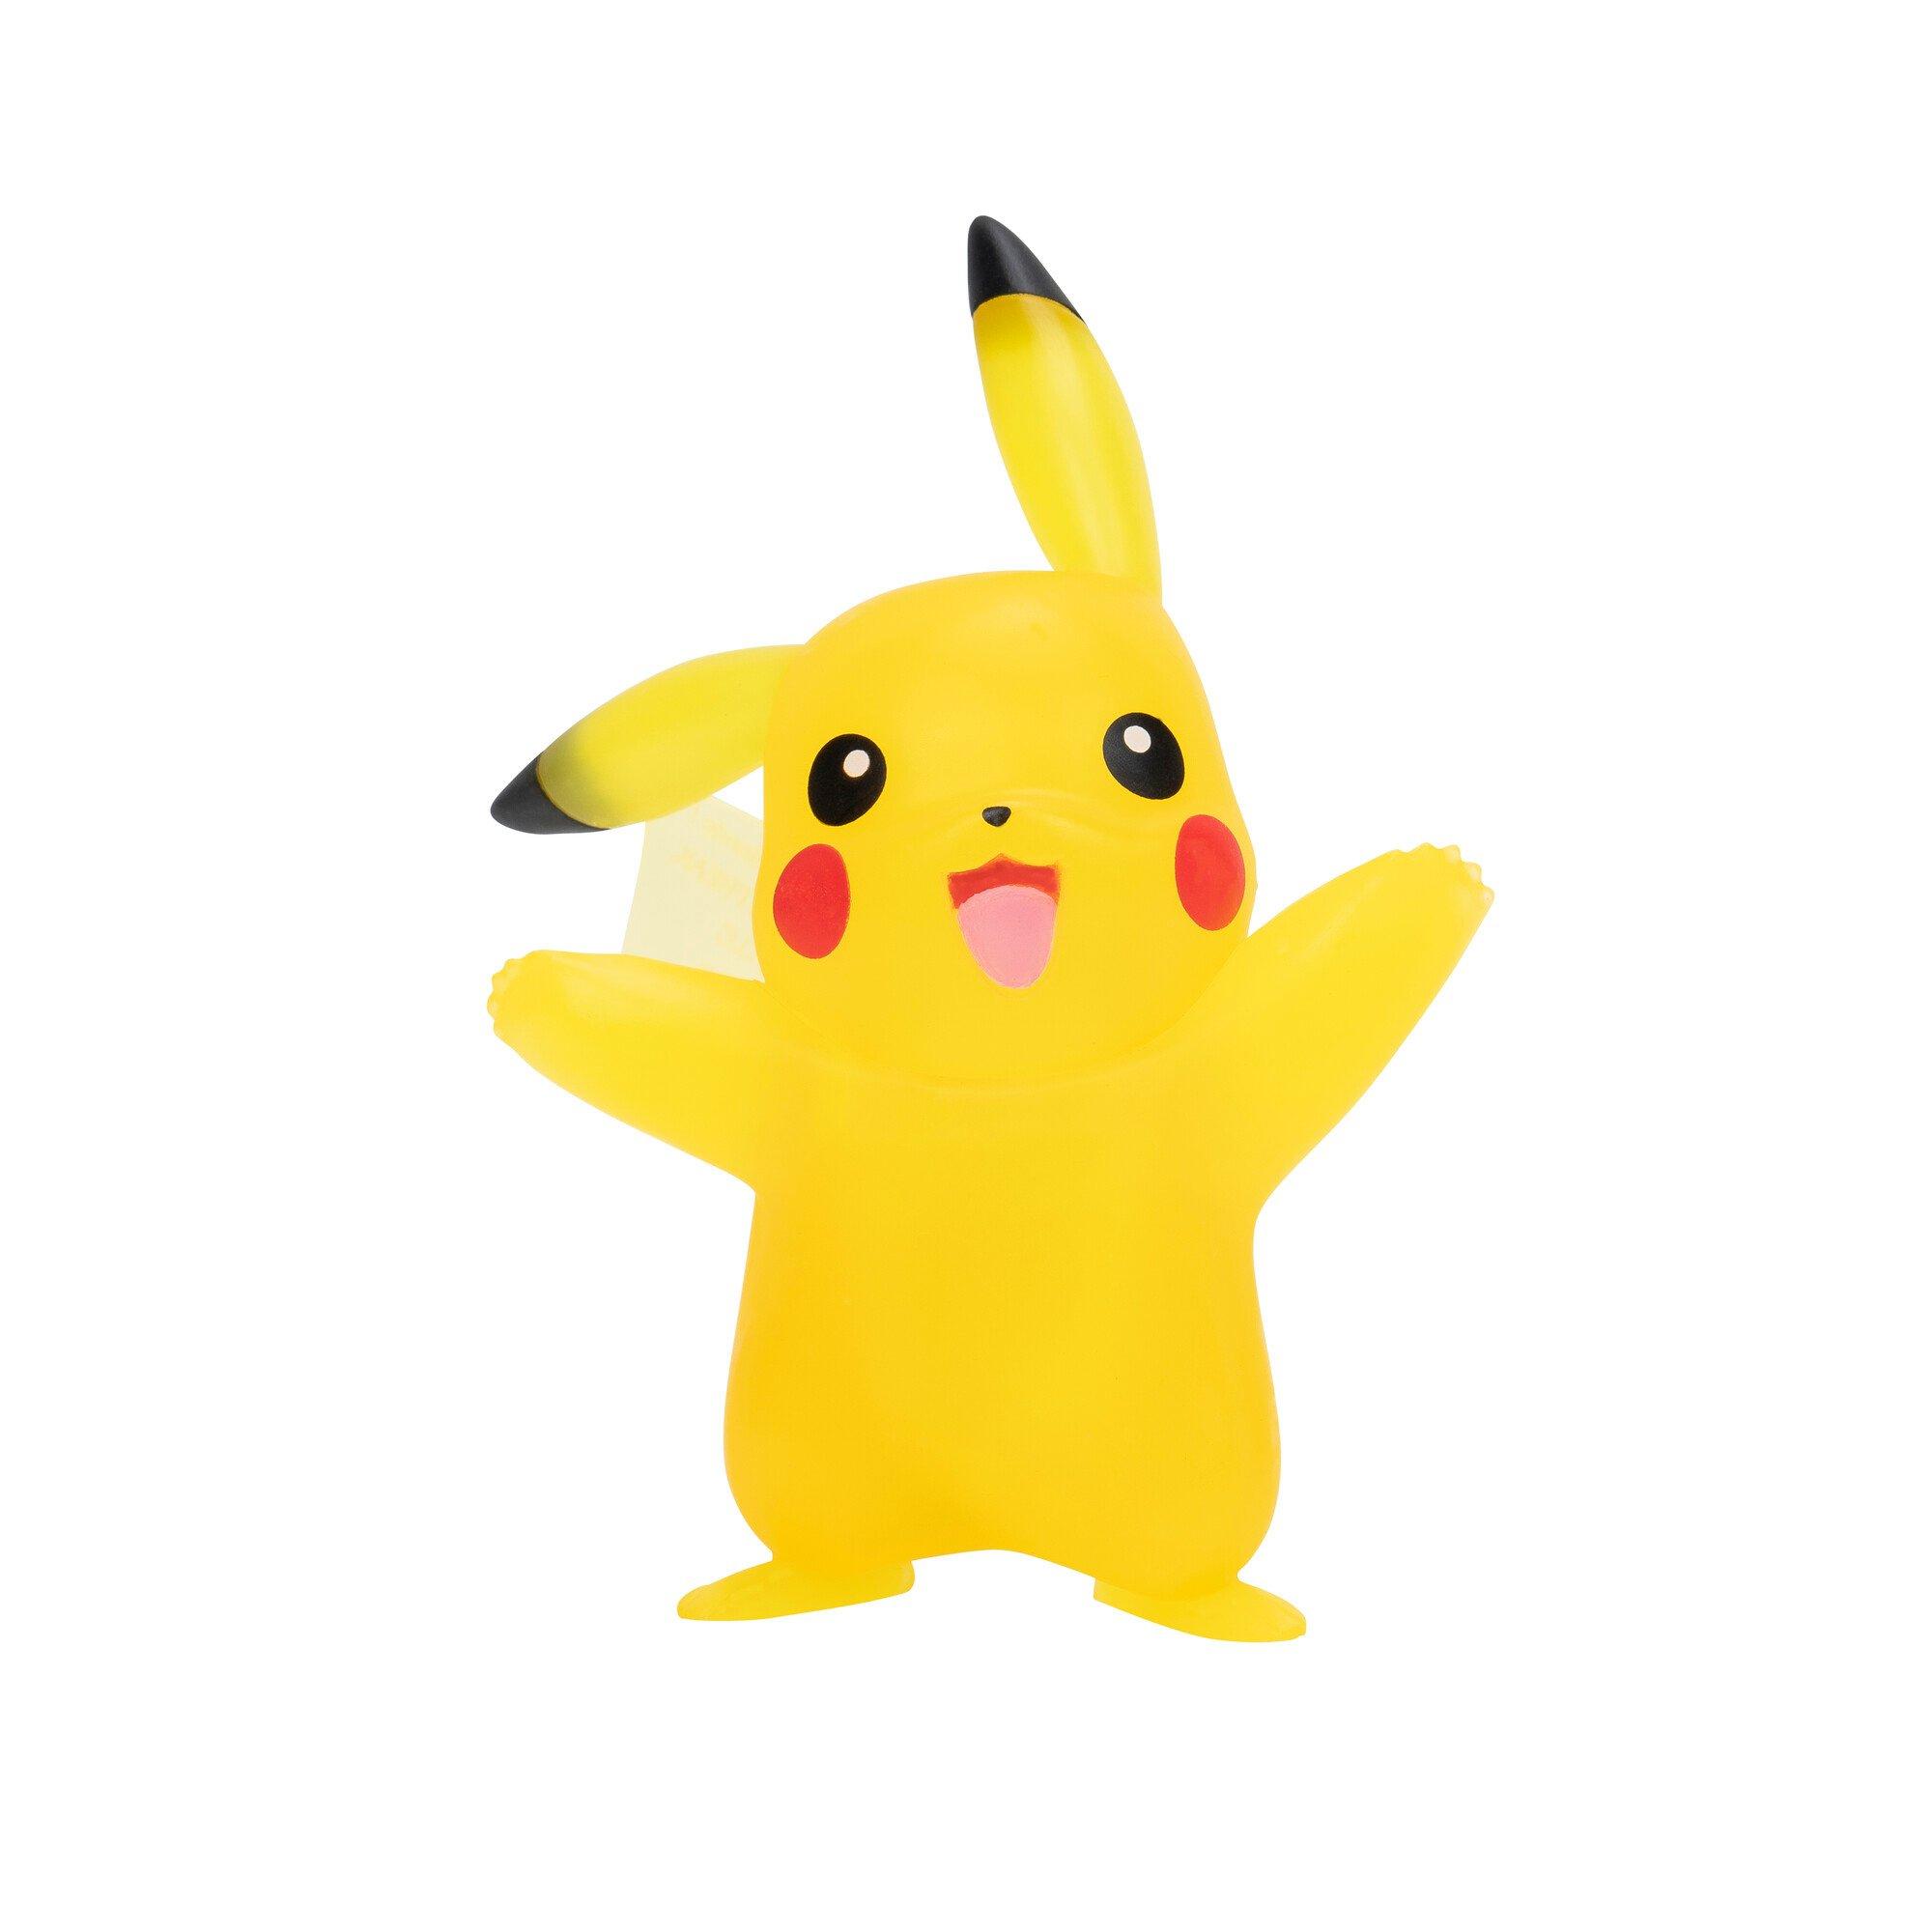 Pikachu Figurine Select Translucide Pokémon - Pokemon